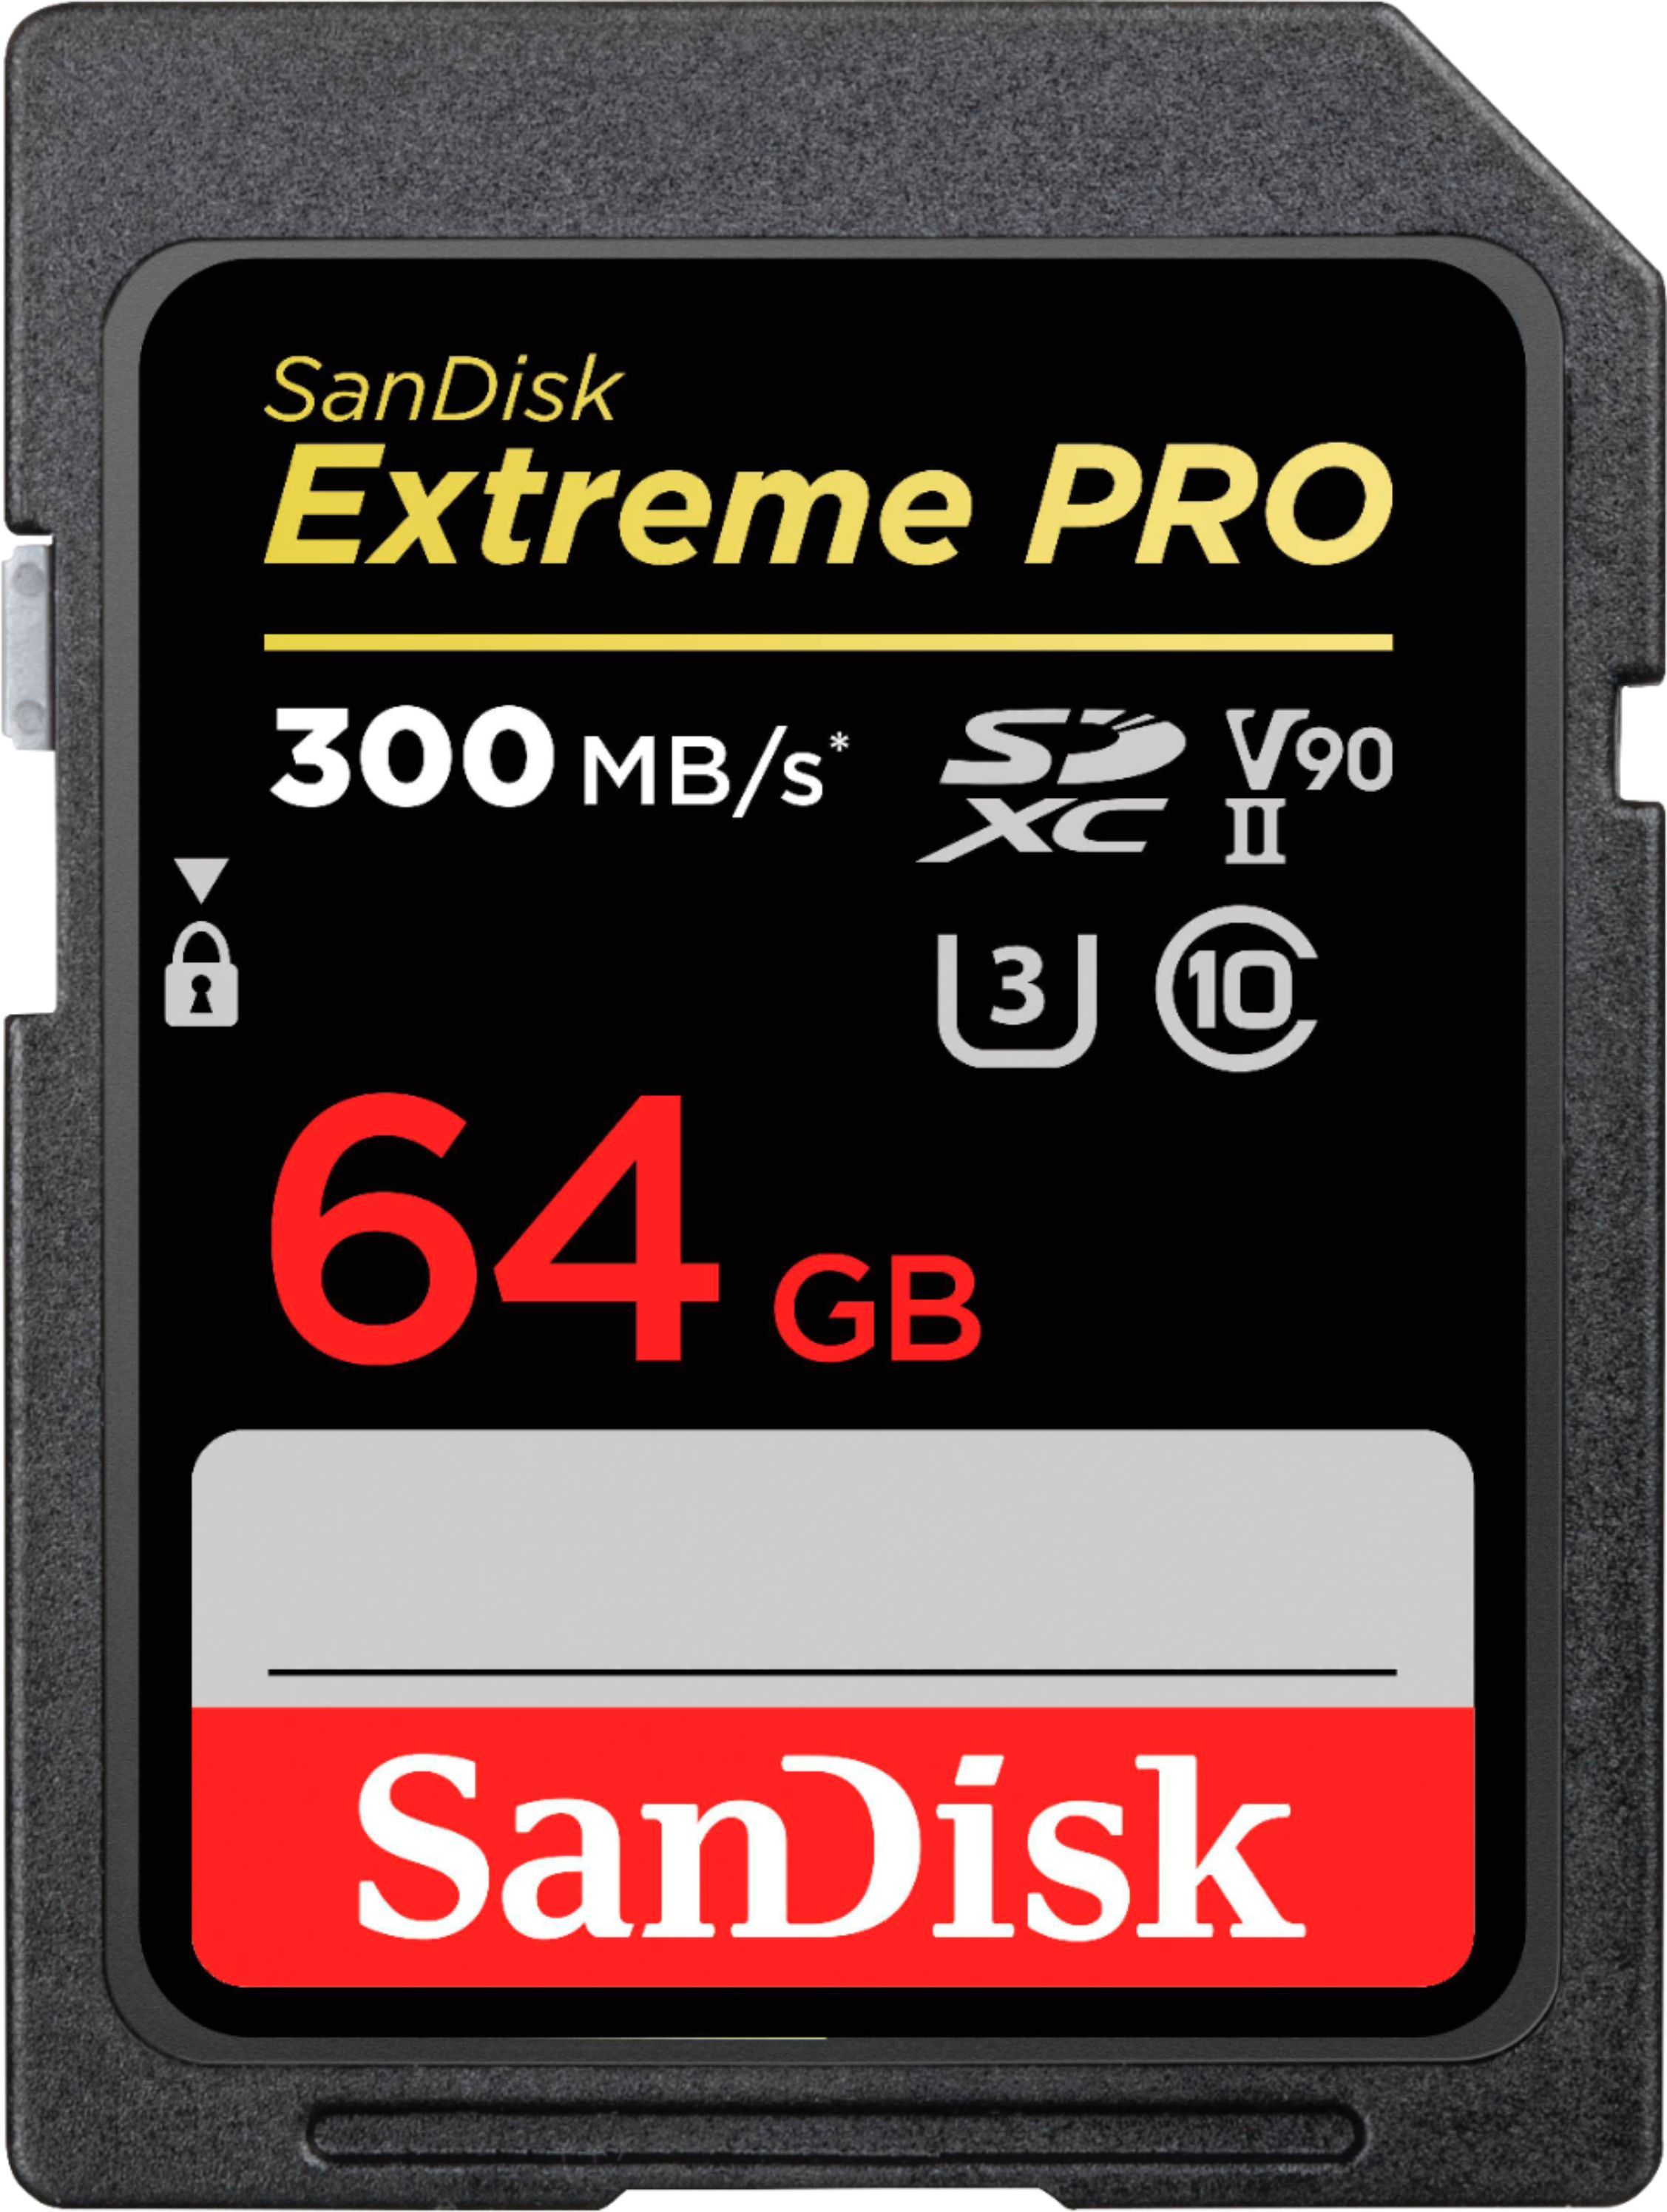 SanDisk Extreme Pro 64GB SDXC UHS-II Memory Card SDSDXDK-064G-ANCIN - Best Buy | Best Buy U.S.